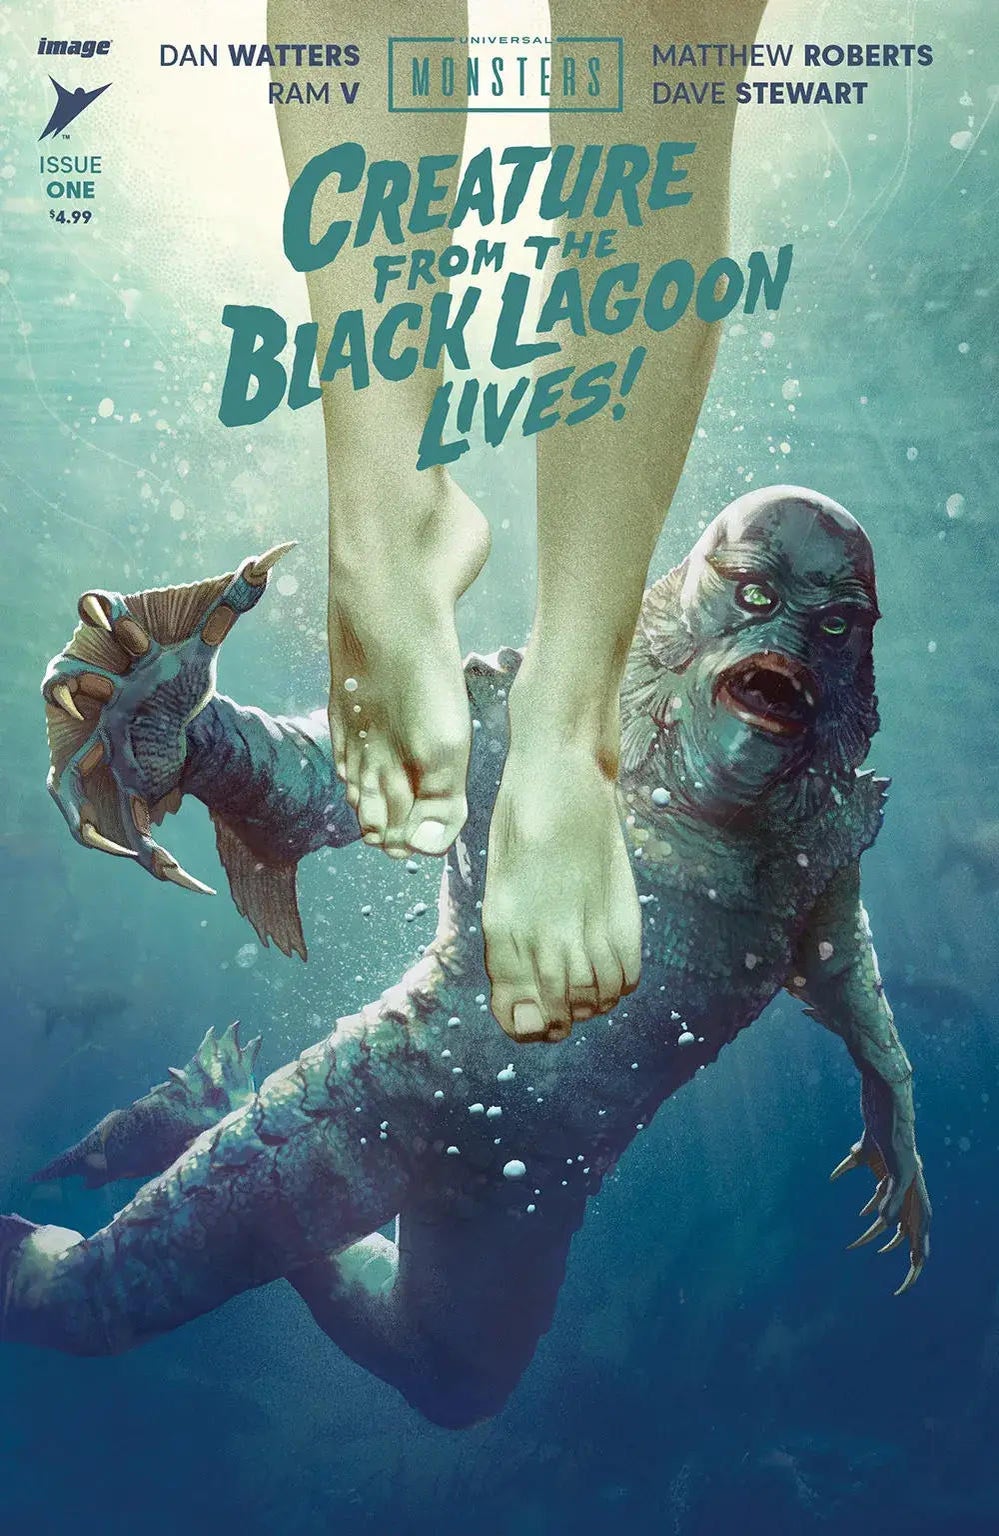 creature-black-lagoon-cover-2.jpg